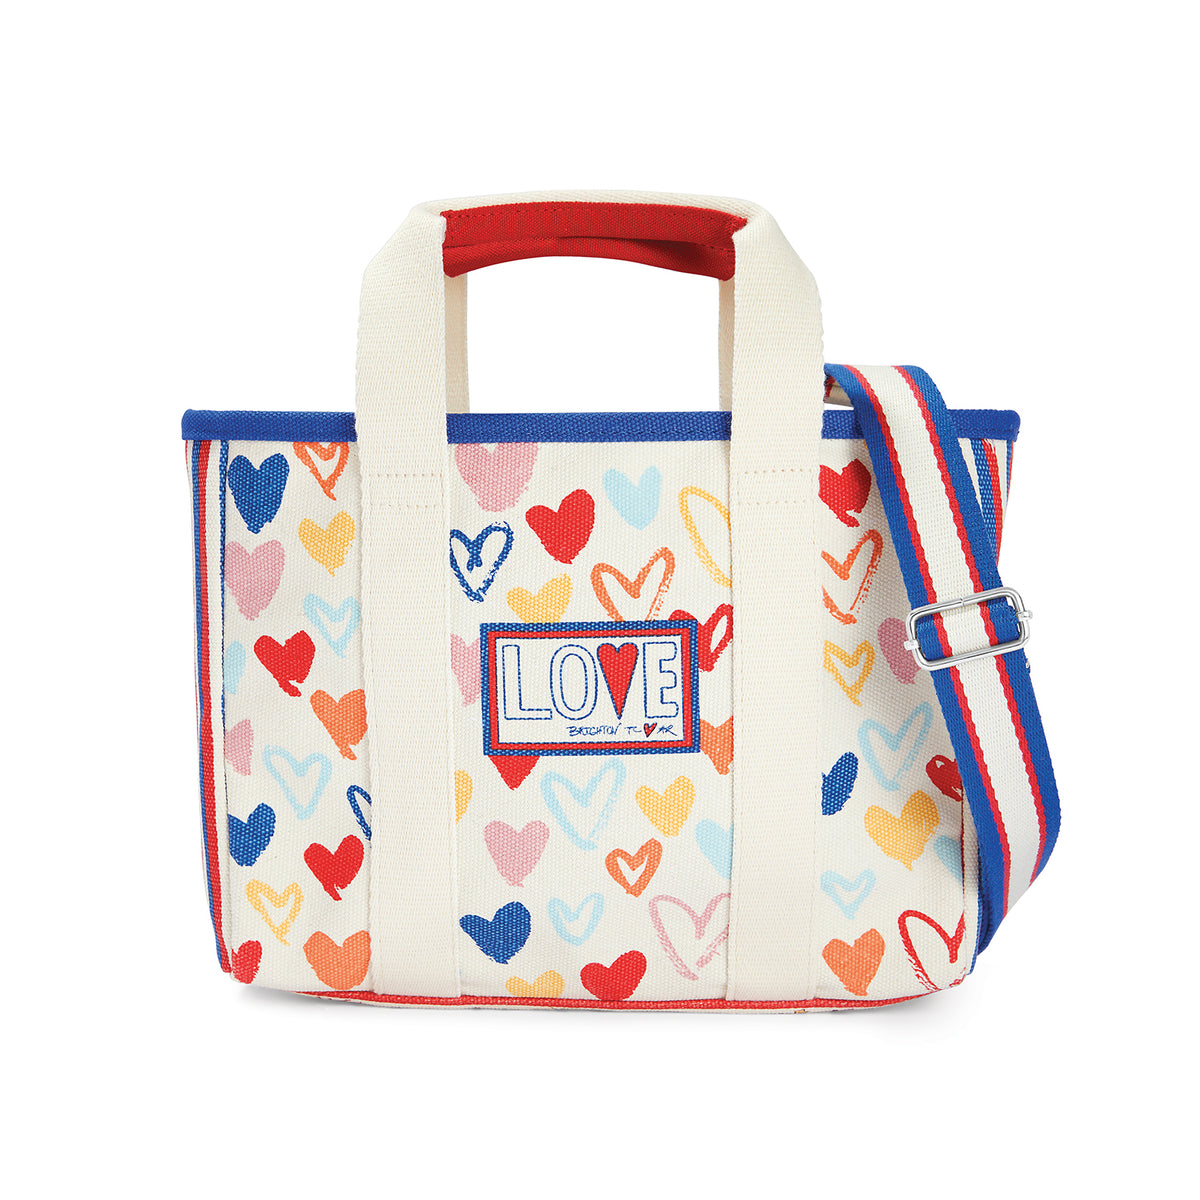 Brighton Runway Model Heart USA Canvas Designer Tote Bag Purse Red White &  Blue